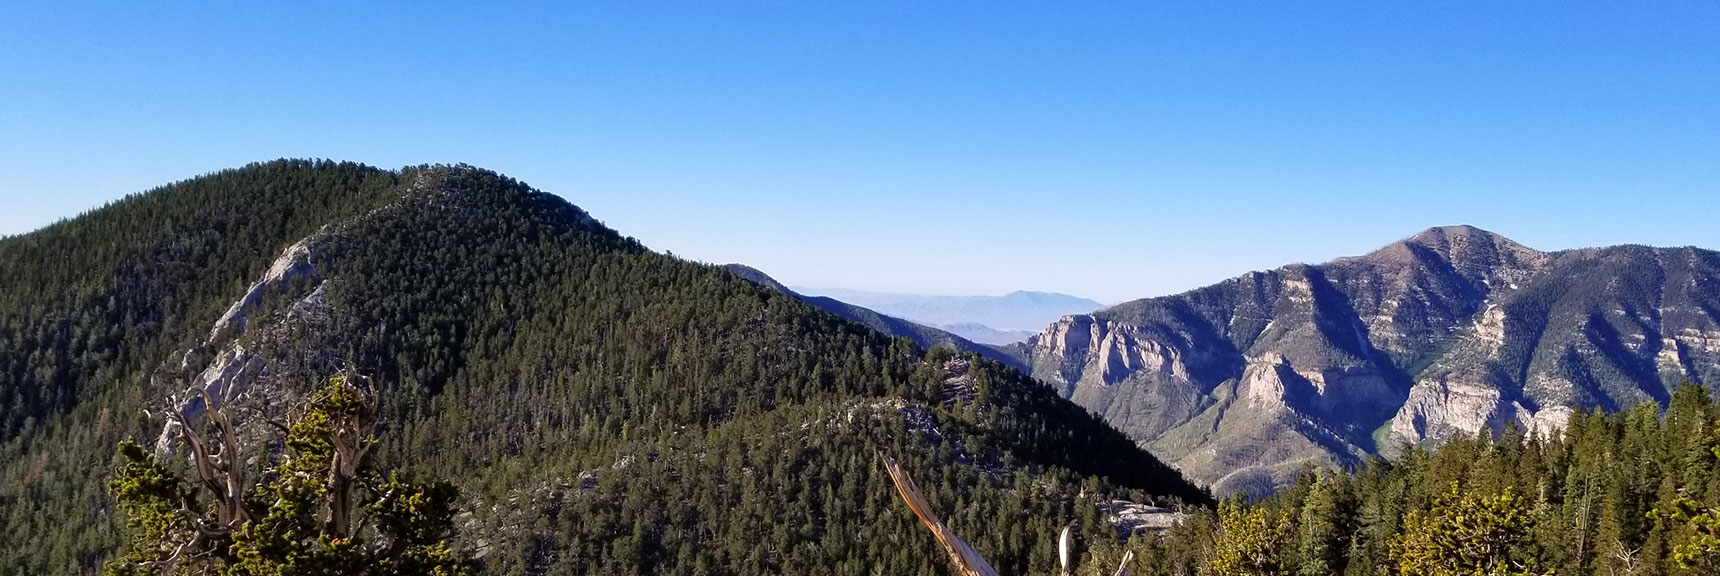 Fletcher Peak from Ridge Over North Loop Trail, Griffith Peak in Background